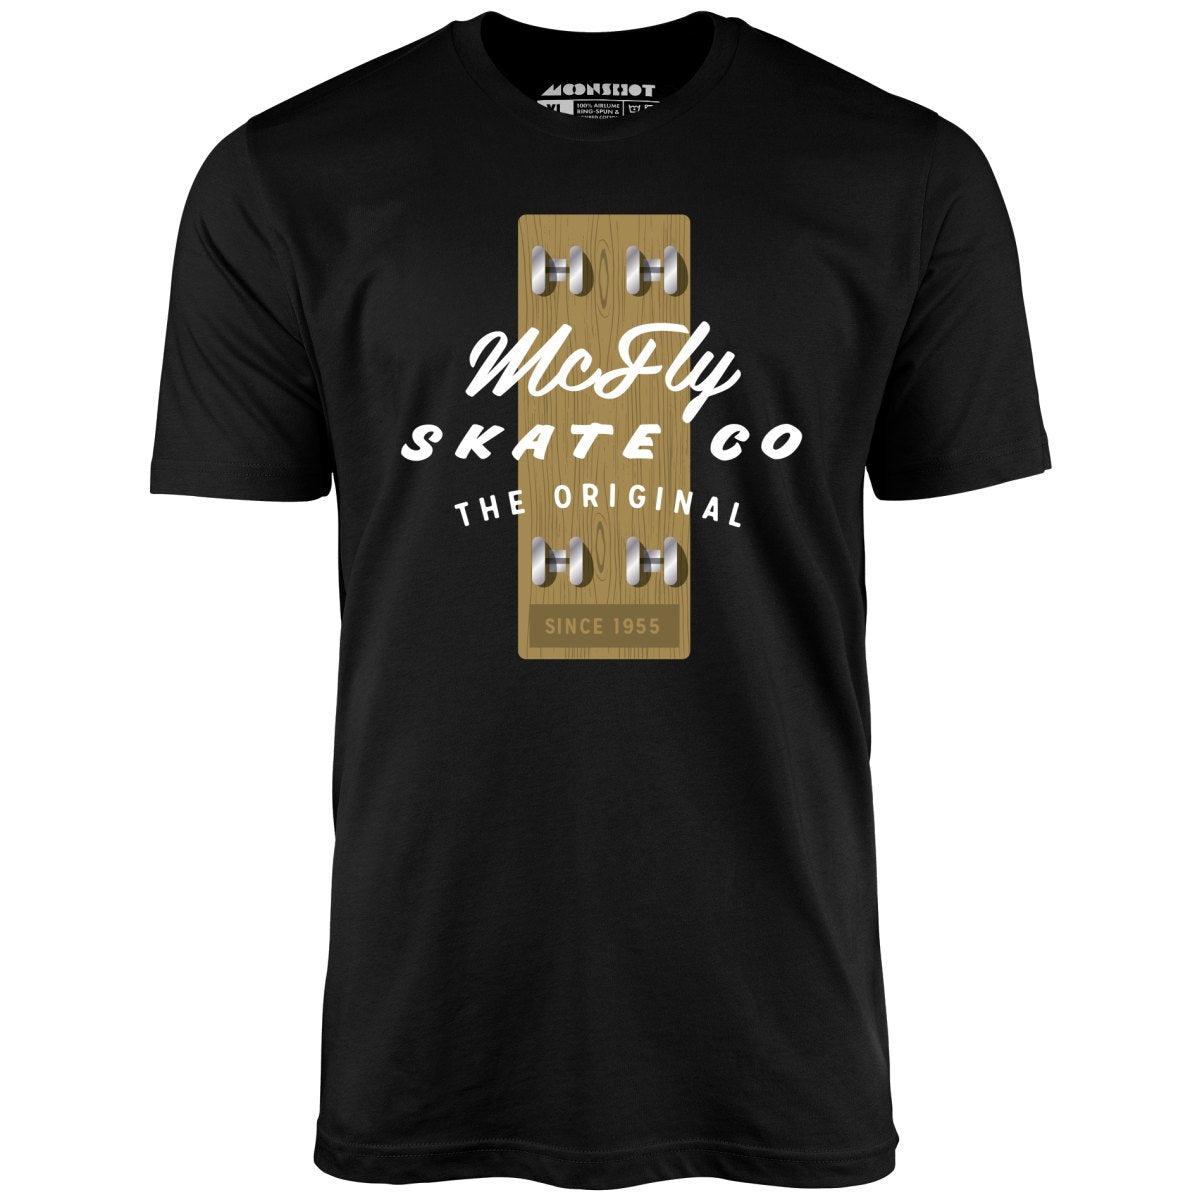 McFly Skate Co - Unisex T-Shirt